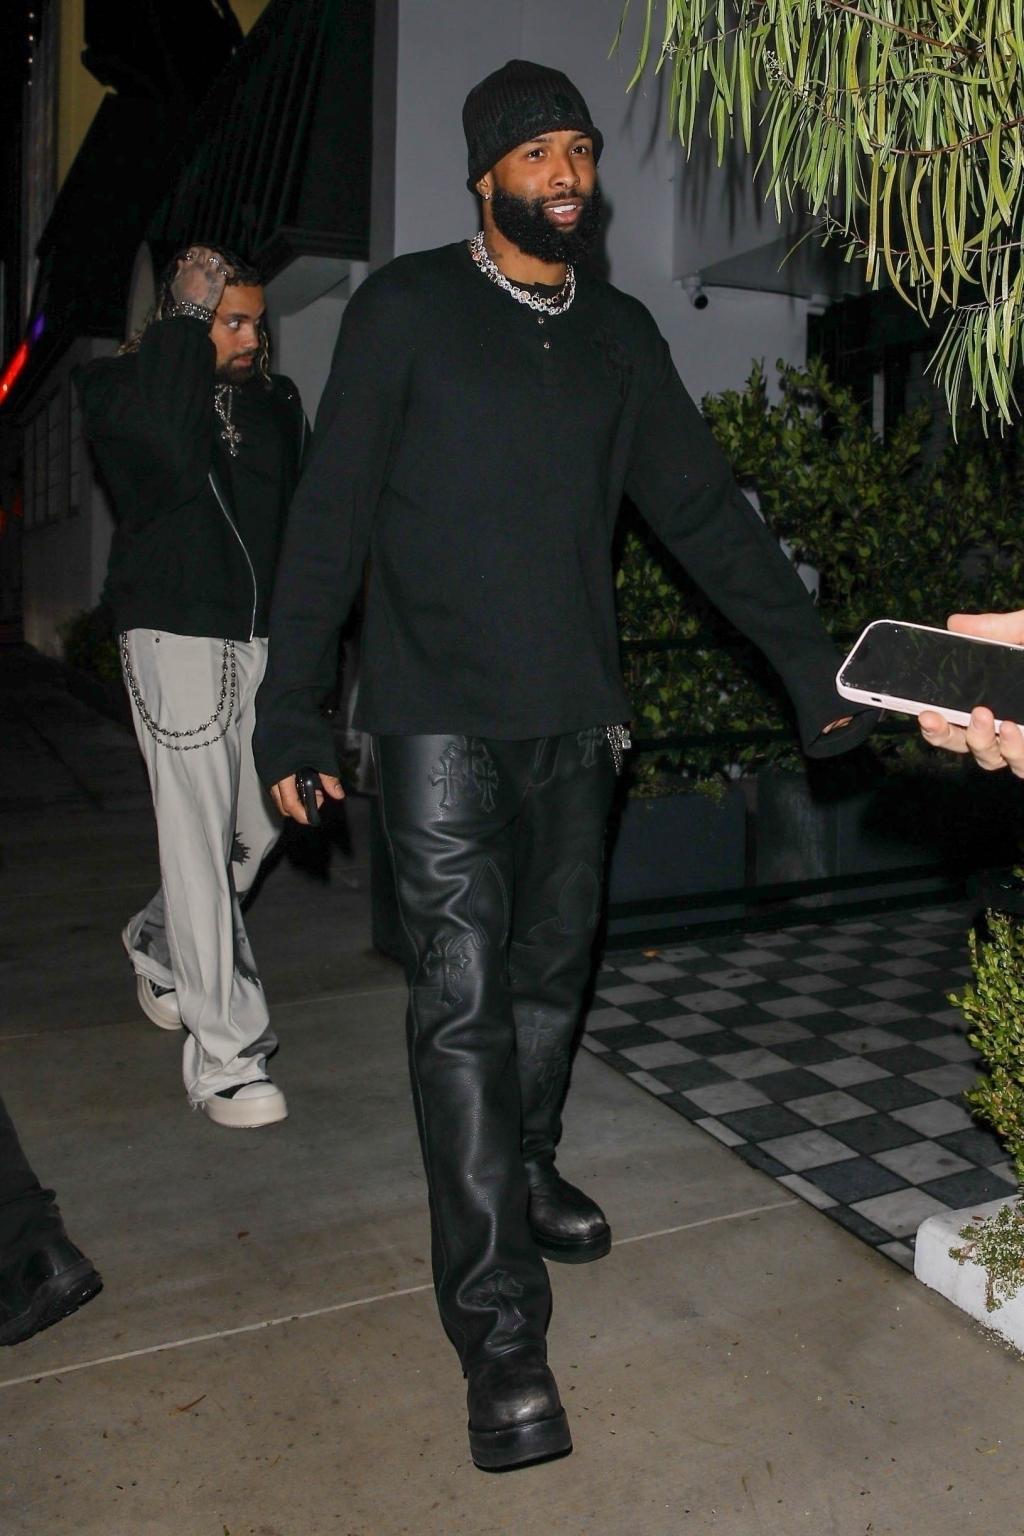 Kim Kardashian and Odell Beckham reignite dating rumors at Jay-Z?s pre-Grammys party